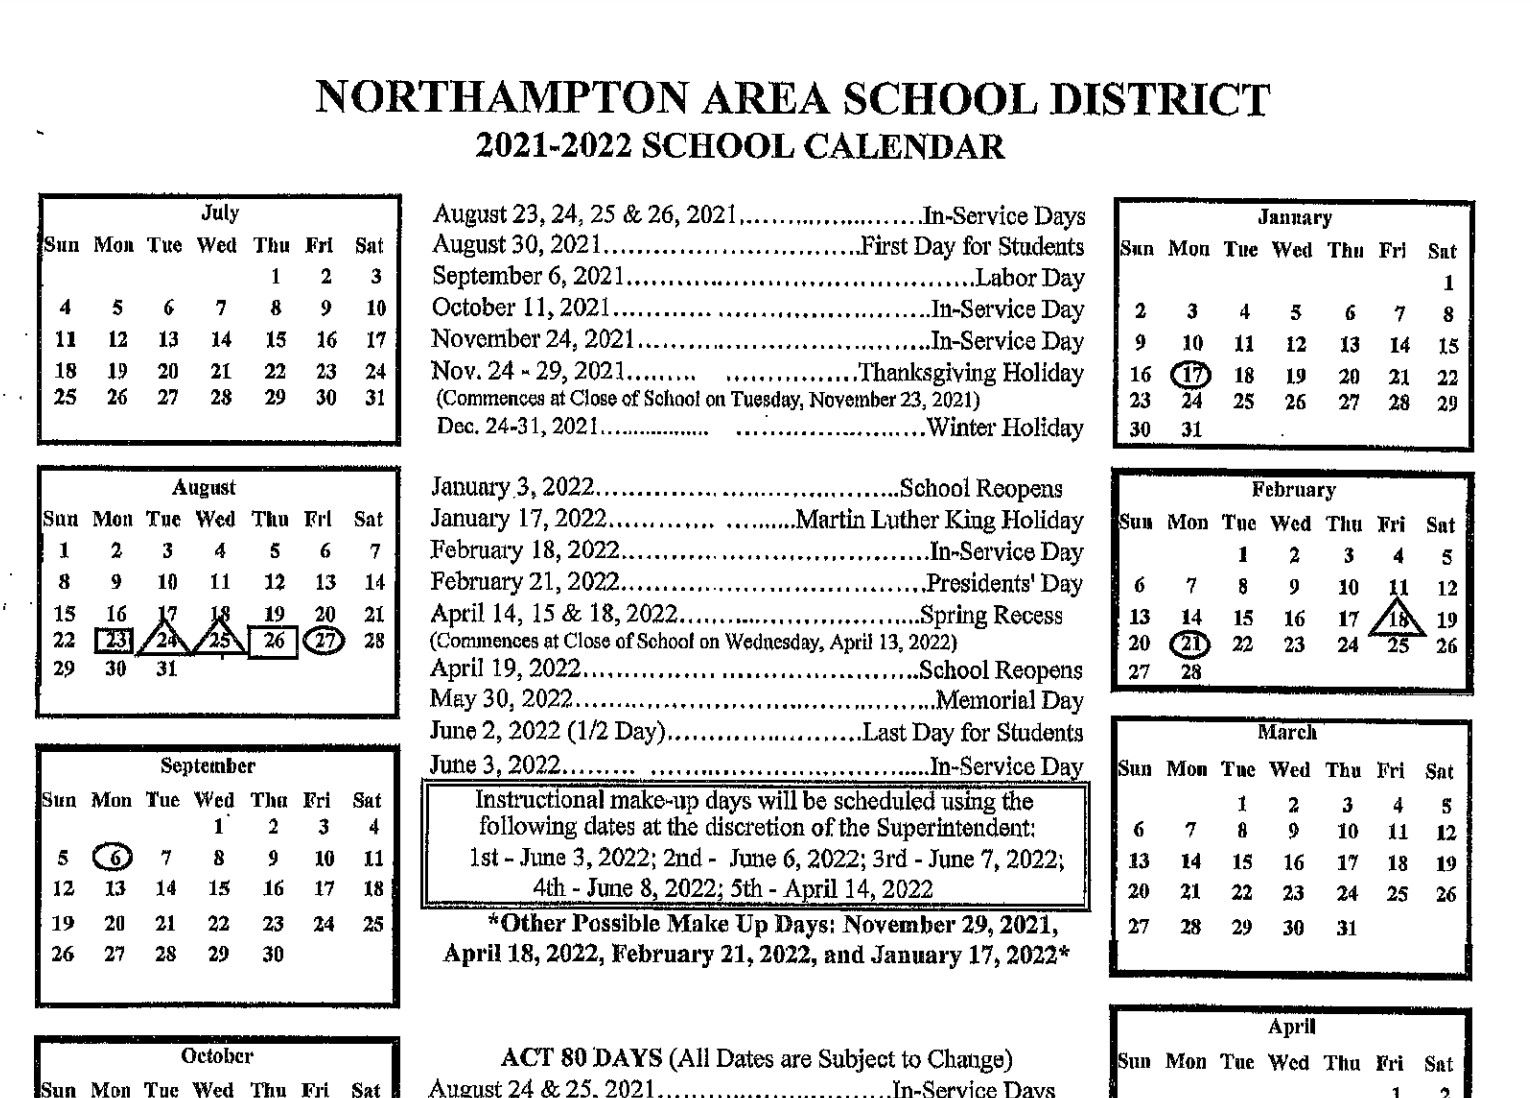 District Calendar thumbnail image